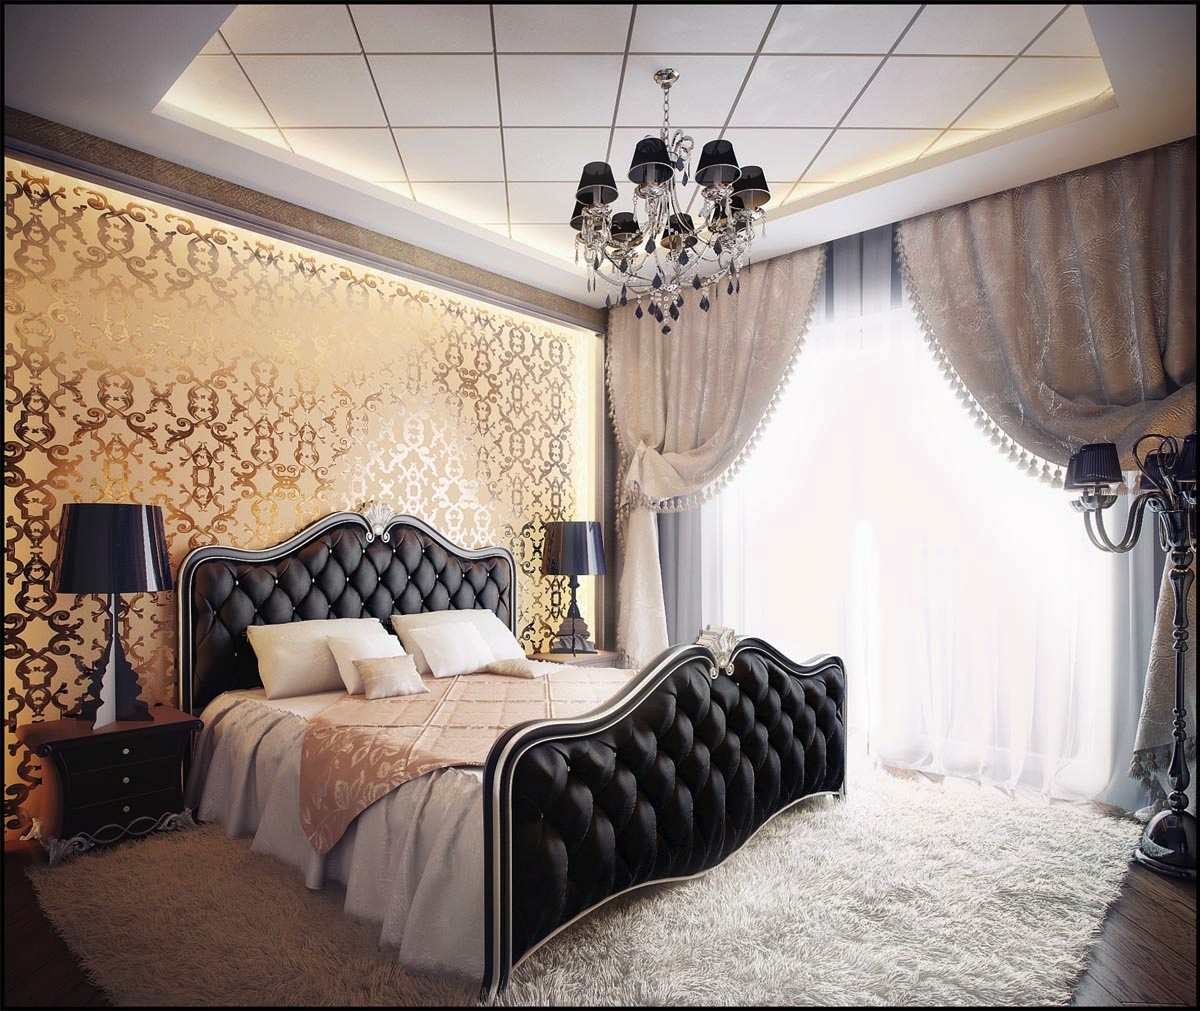 black and white elegant bedroom "width =" 1200 "height =" 1011 "srcset =" https://mileray.com/wp-content/uploads/2020/05/1588509606_174_Decorating-Elegant-Bedroom-Designs-Adding-a-Perfect-Classic-and-Luxury.jpg 1200w, https://mileray.com/ wp-content / uploads / 2016/09 / Irena1-300x253.jpg 300w, https://mileray.com/wp-content/uploads/2016/09/Irena1-768x647.jpg 768w, https://mileray.com/ wp-content / uploads / 2016/09 / Irena1-1024x863.jpg 1024w, https://mileray.com/wp-content/uploads/2016/09/Irena1-696x586.jpg 696w, https://mileray.com/ wp-content / uploads / 2016/09 / Irena1-1068x900.jpg 1068w, https://mileray.com/wp-content/uploads/2016/09/Irena1-499x420.jpg 499w "sizes =" (maximum width: 1200px ) 100vw, 1200px